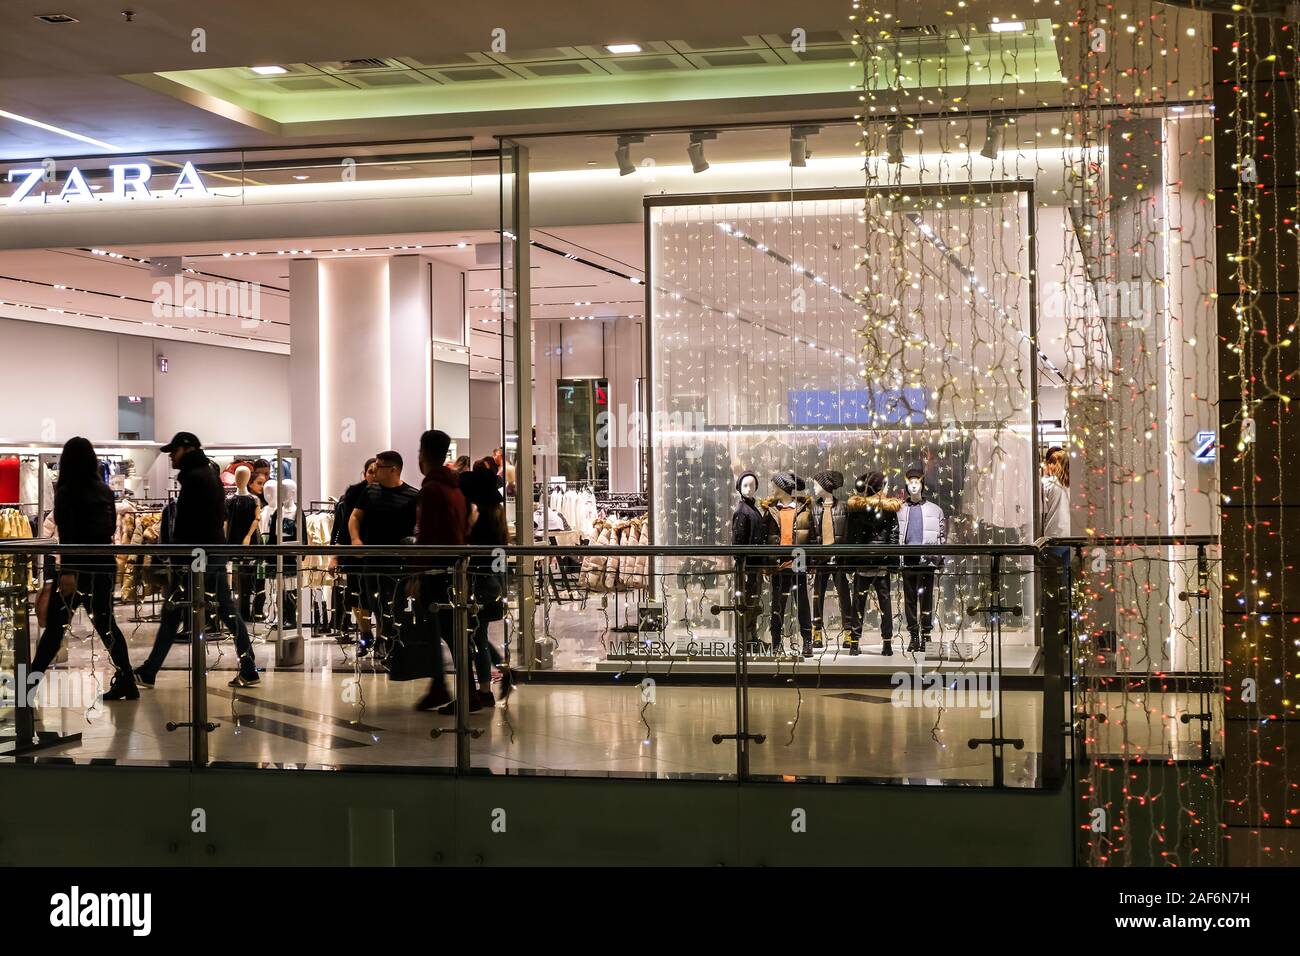 Bukarest, Rumänien - 26. Dezember 2017: Zara Store in AFI Cotroceni  Shopping Mall. Internationalen Kette der Mode Kaufhäuser Stockfotografie -  Alamy